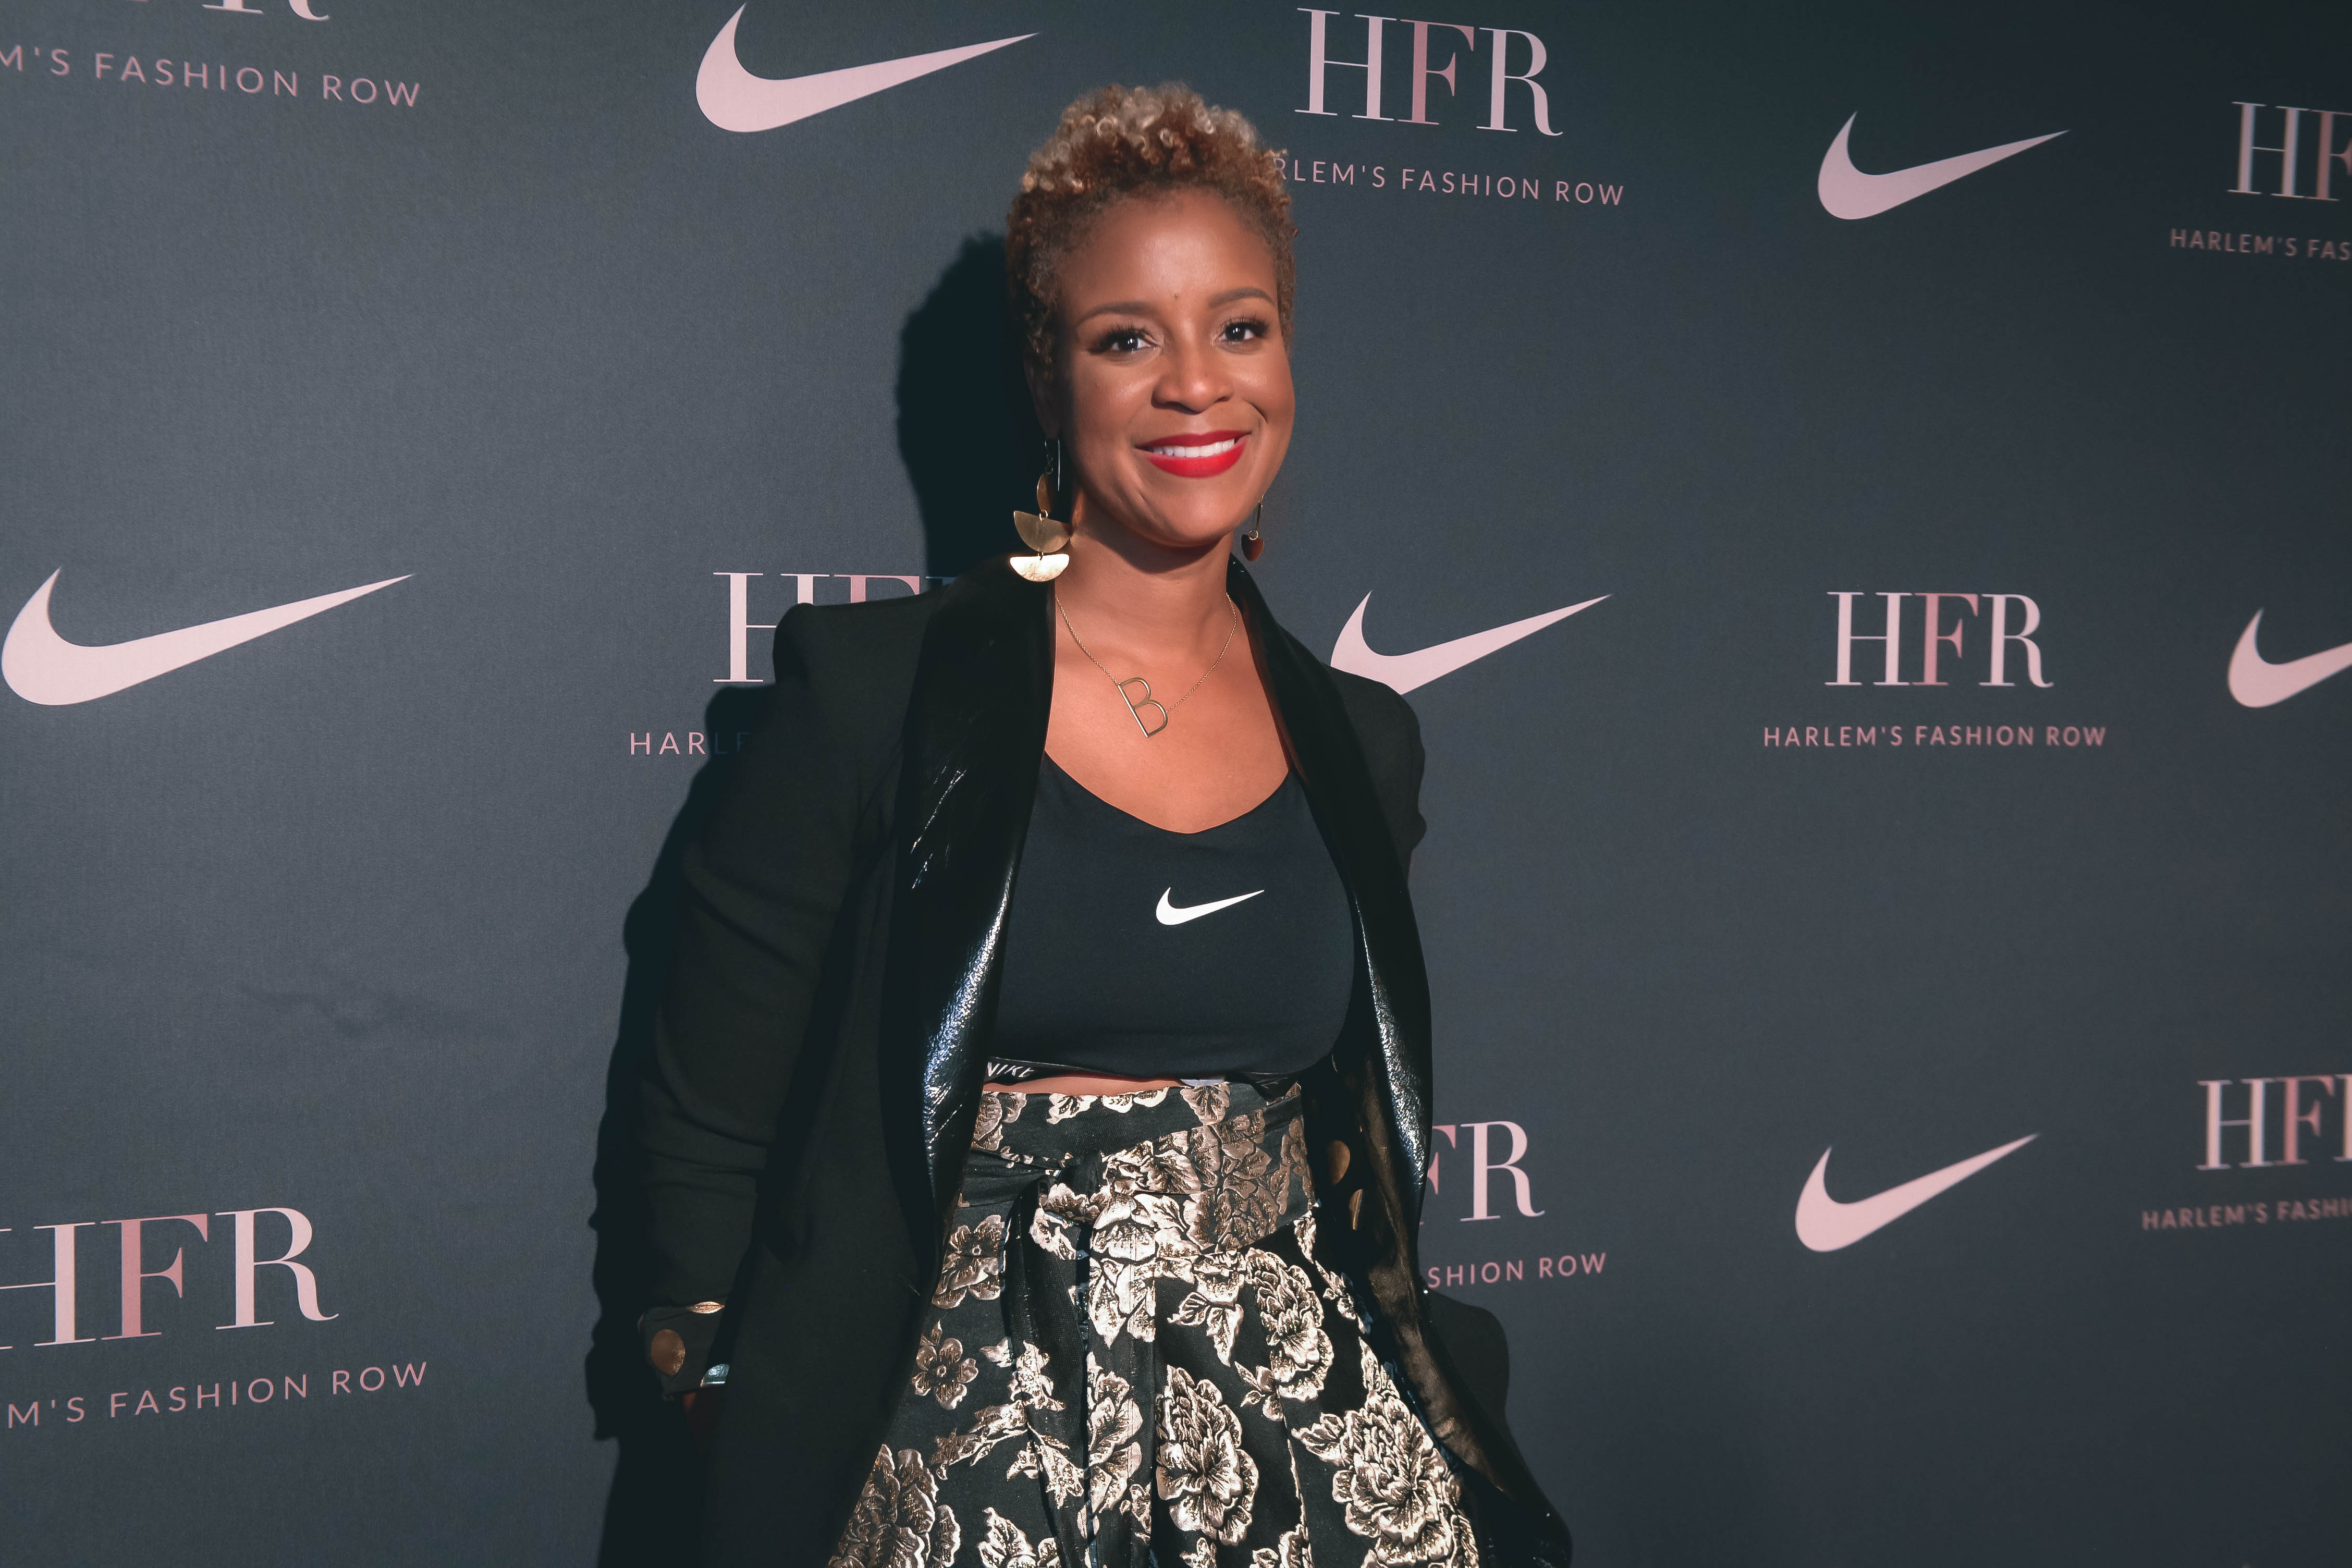 Harlem's Fashion Row Awards Celebrate Black Fashion With a Big Announcement  From Nike - Fashionista